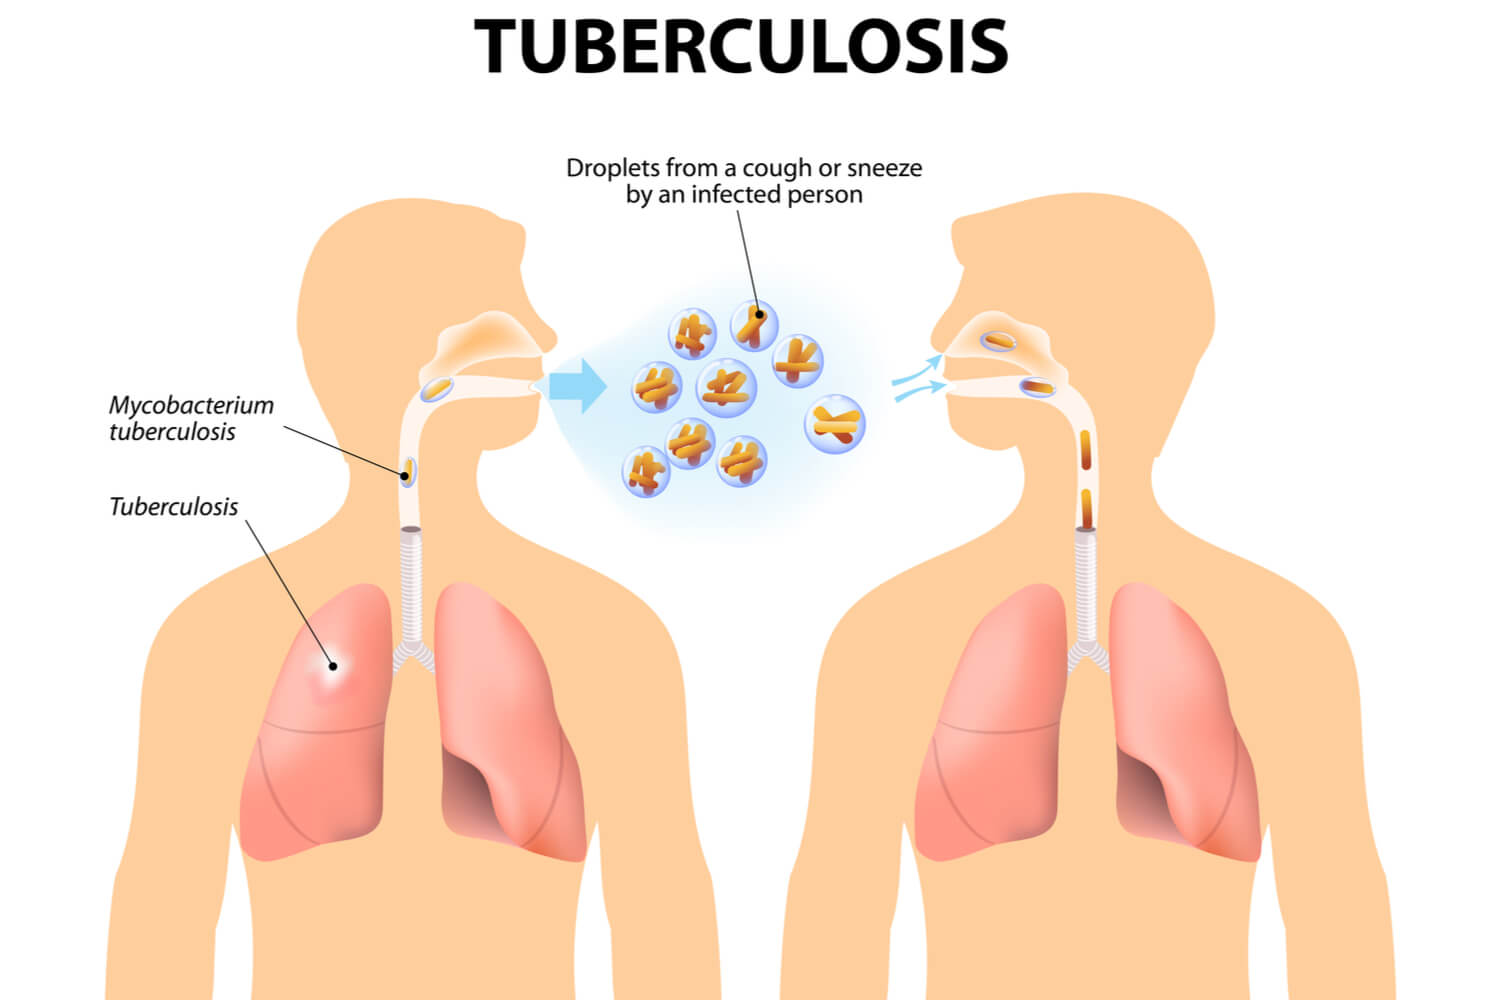 cause of TB